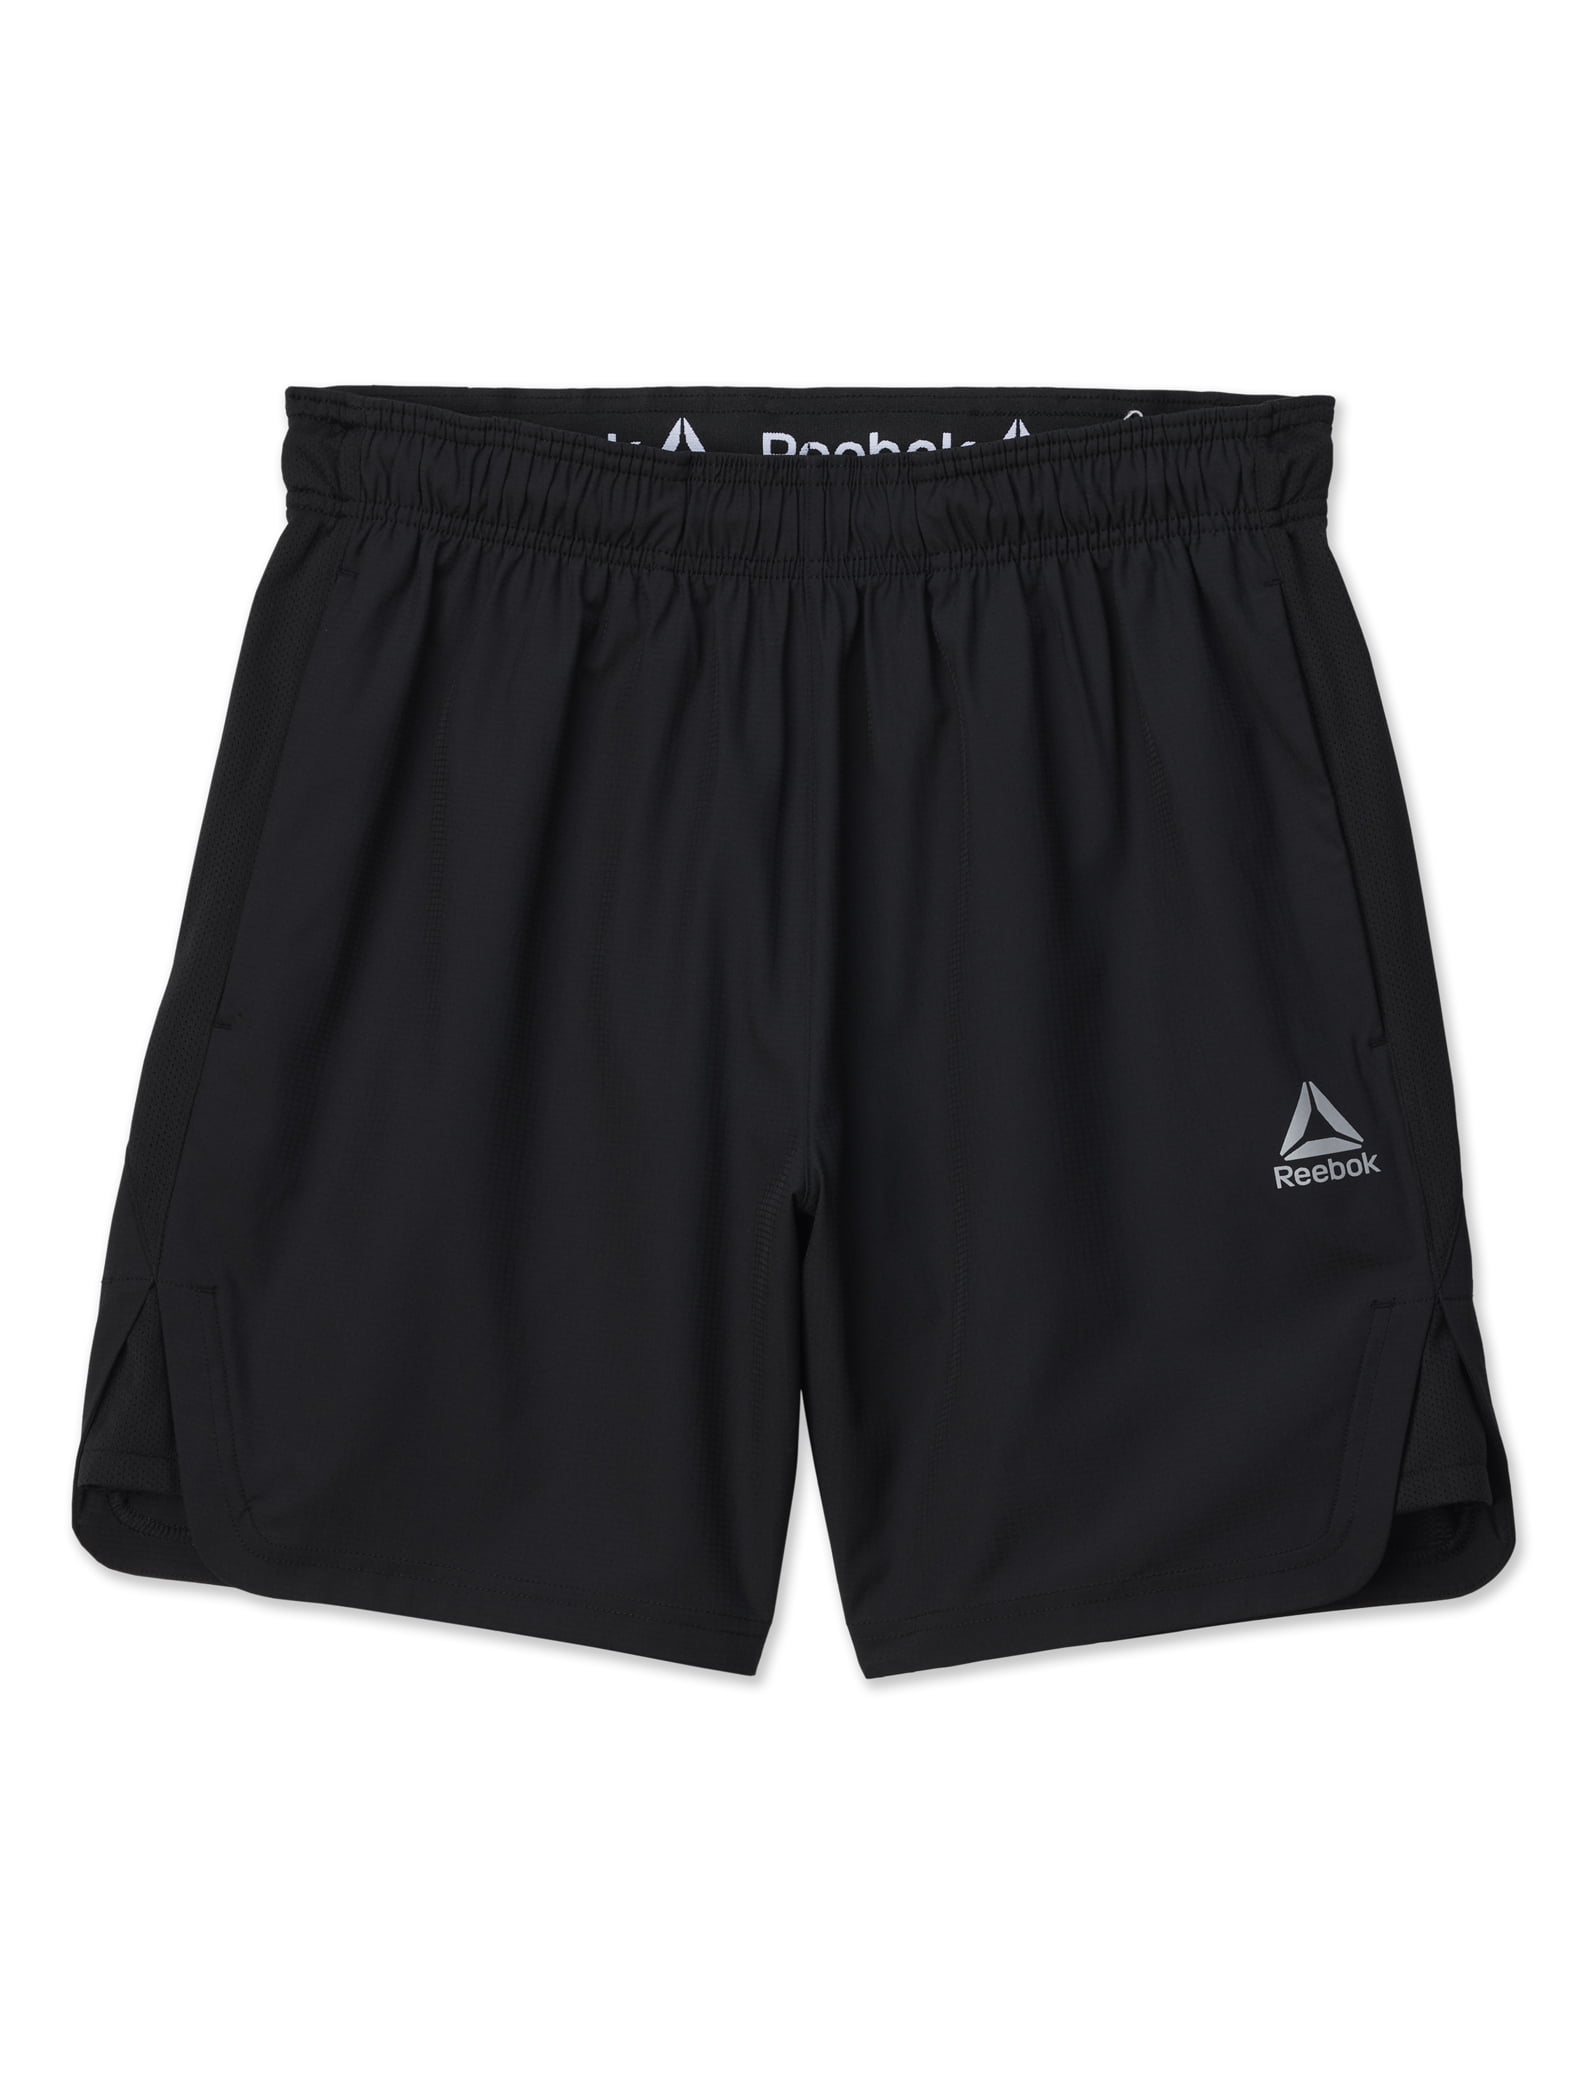 Reebok Men's Basketball Shorts, Vented, Drawstring, Black/Gray Logo 33X9  Size L